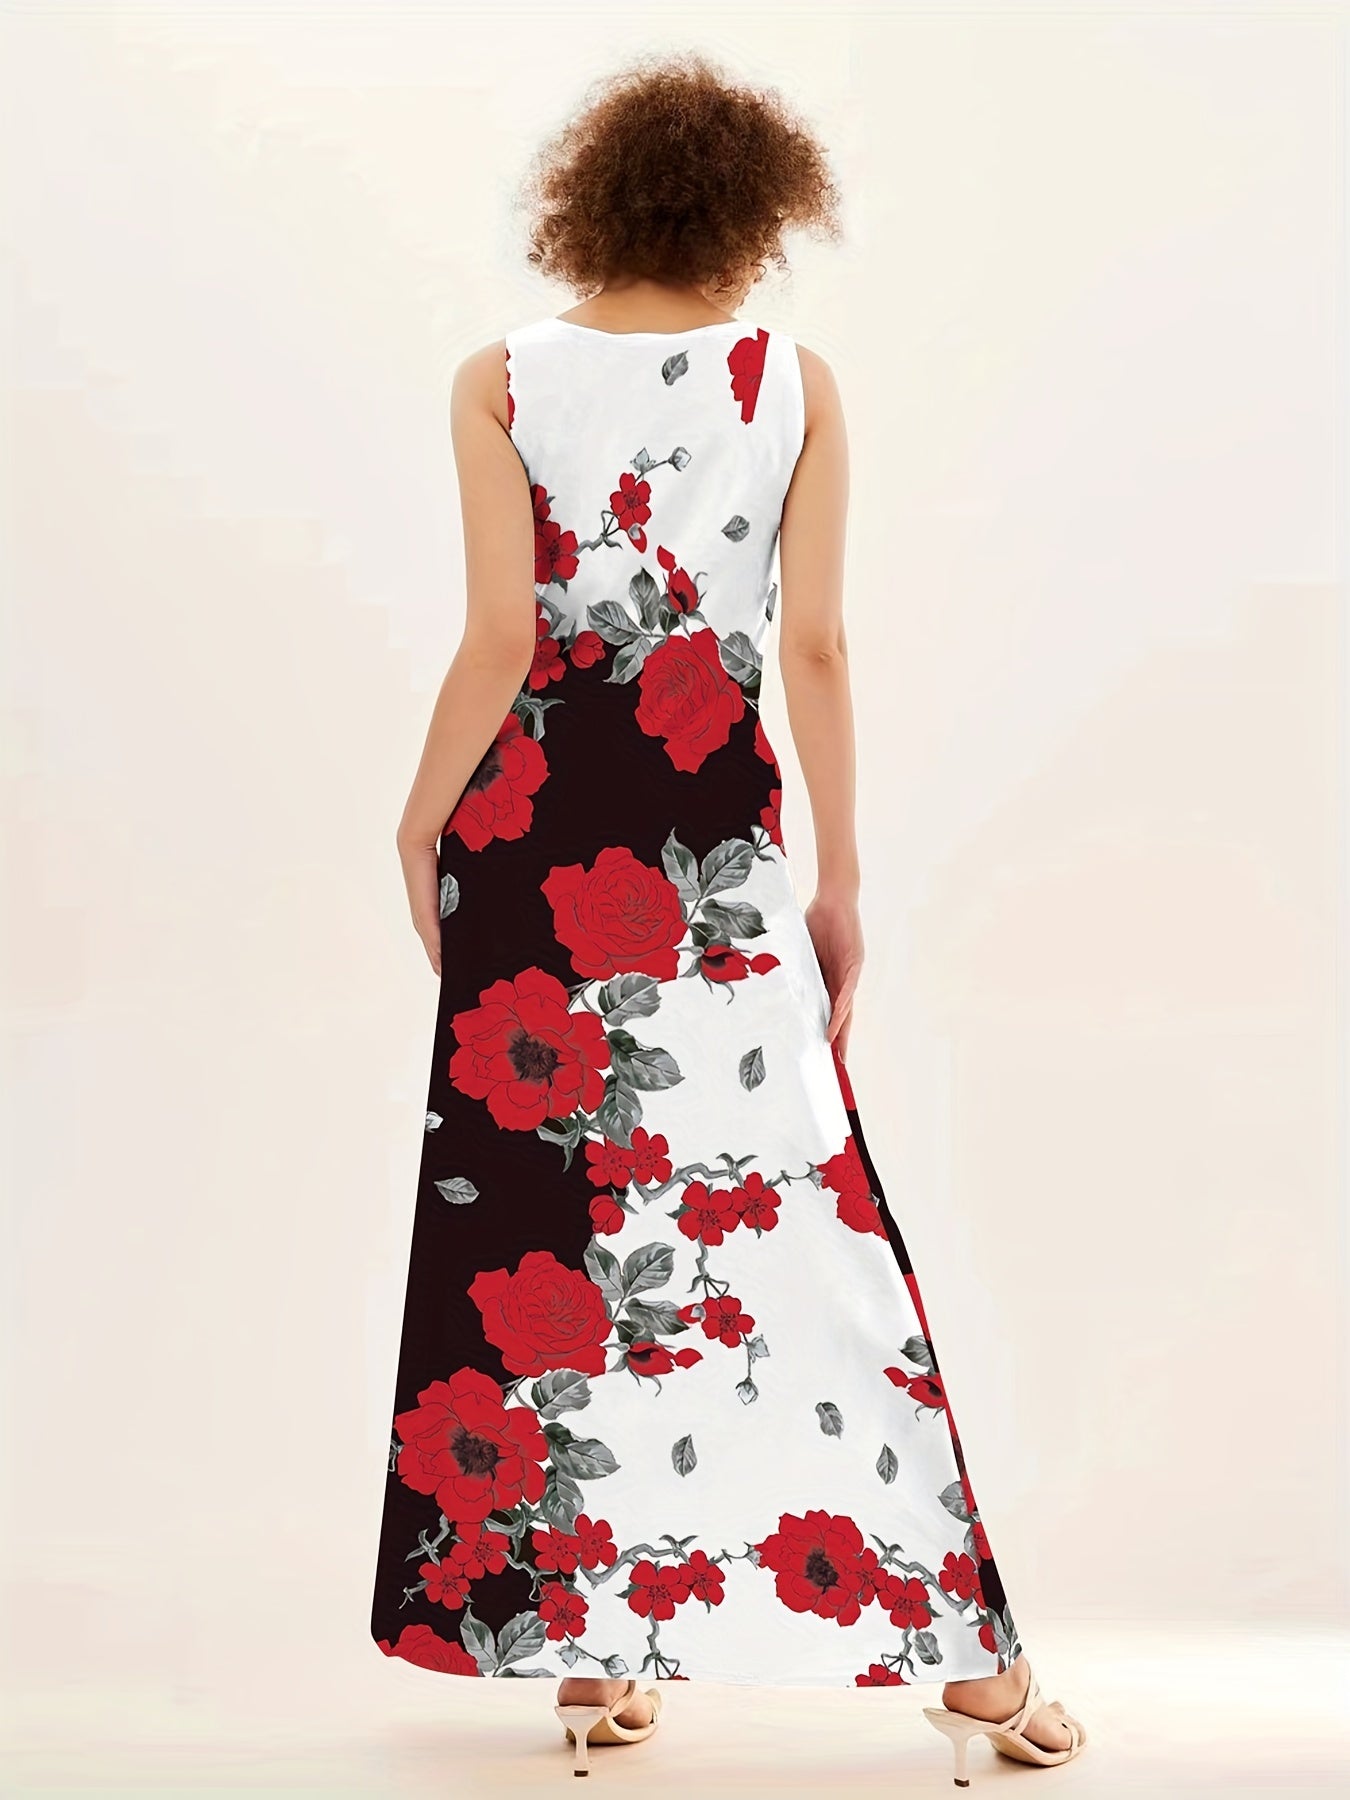 「lovevop」Floral Print Pocket Dress, Casual Pocket Waist Summer Swing Long Dresses, Women's Clothing